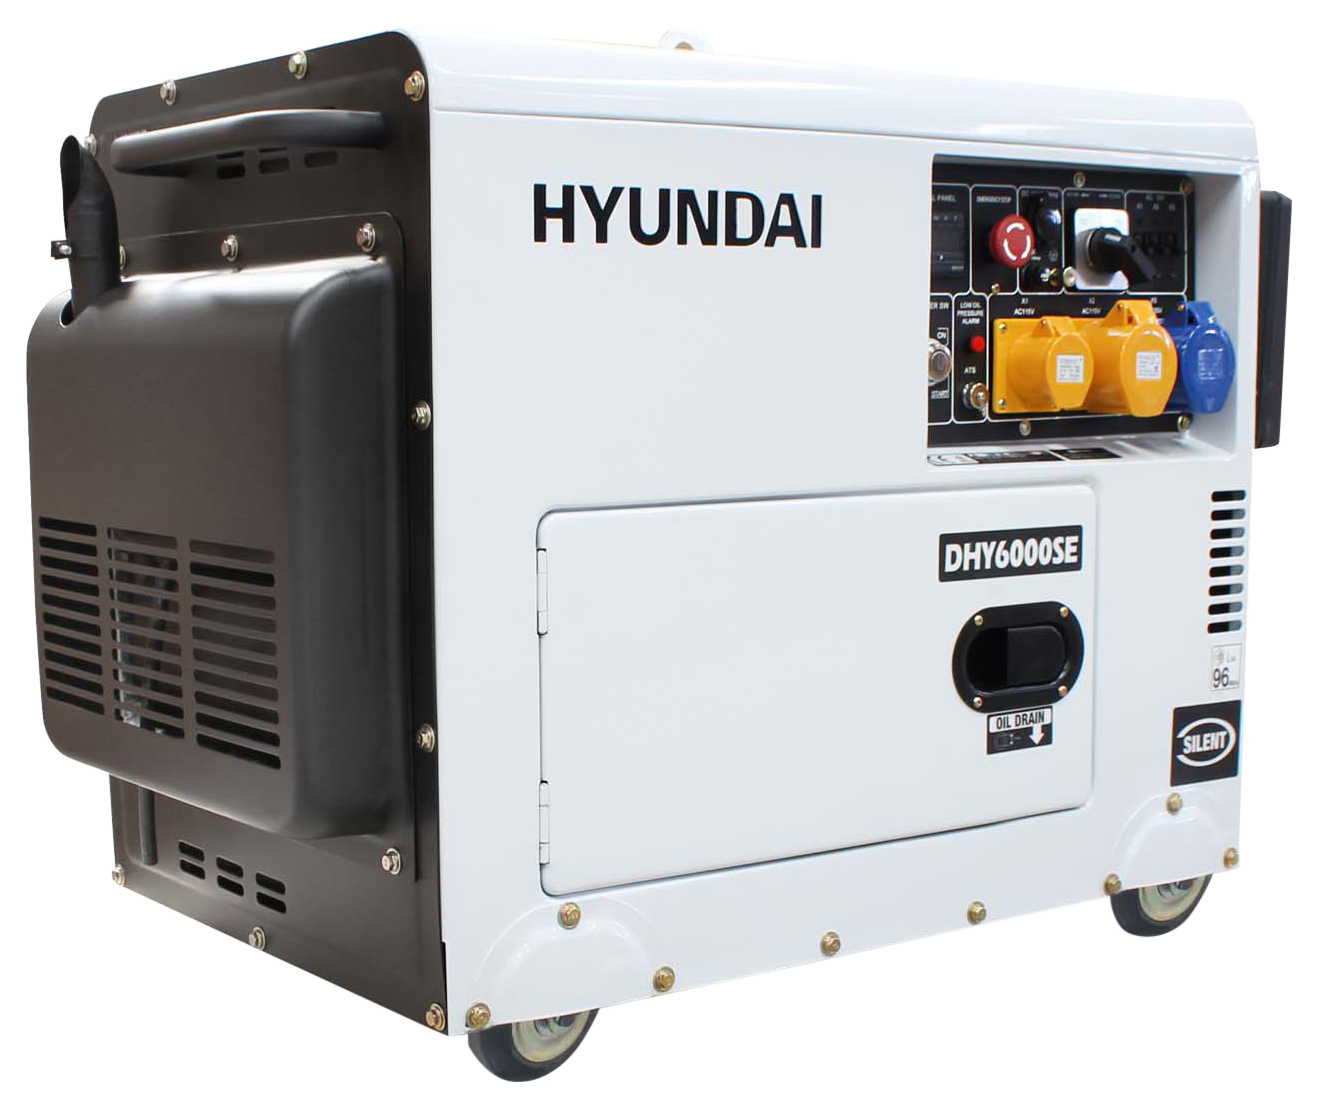 Hyundai DHY6000SE 5.2kW 115V/230V Silenced Air Cooled Diesel Generator - 5200W